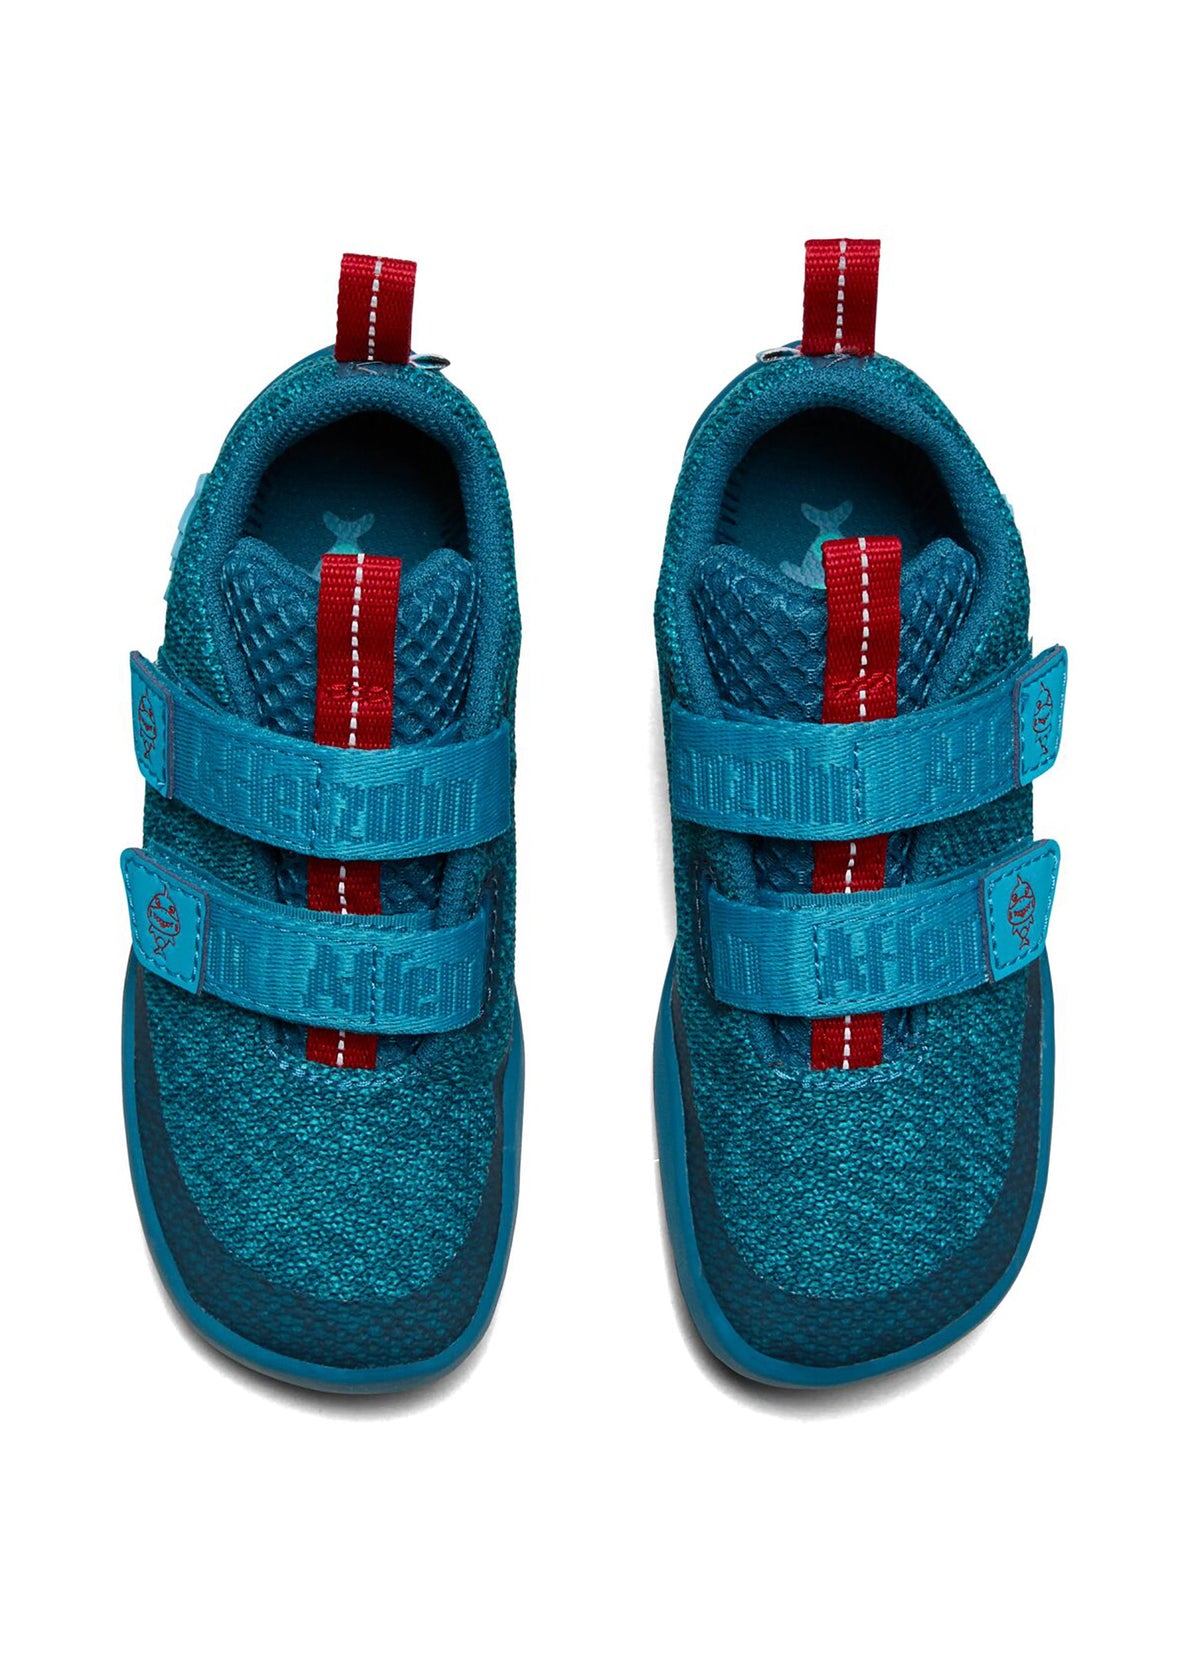 Children's Shark barefoot sneakers - Sneaker Knit Happy, blue, vegan